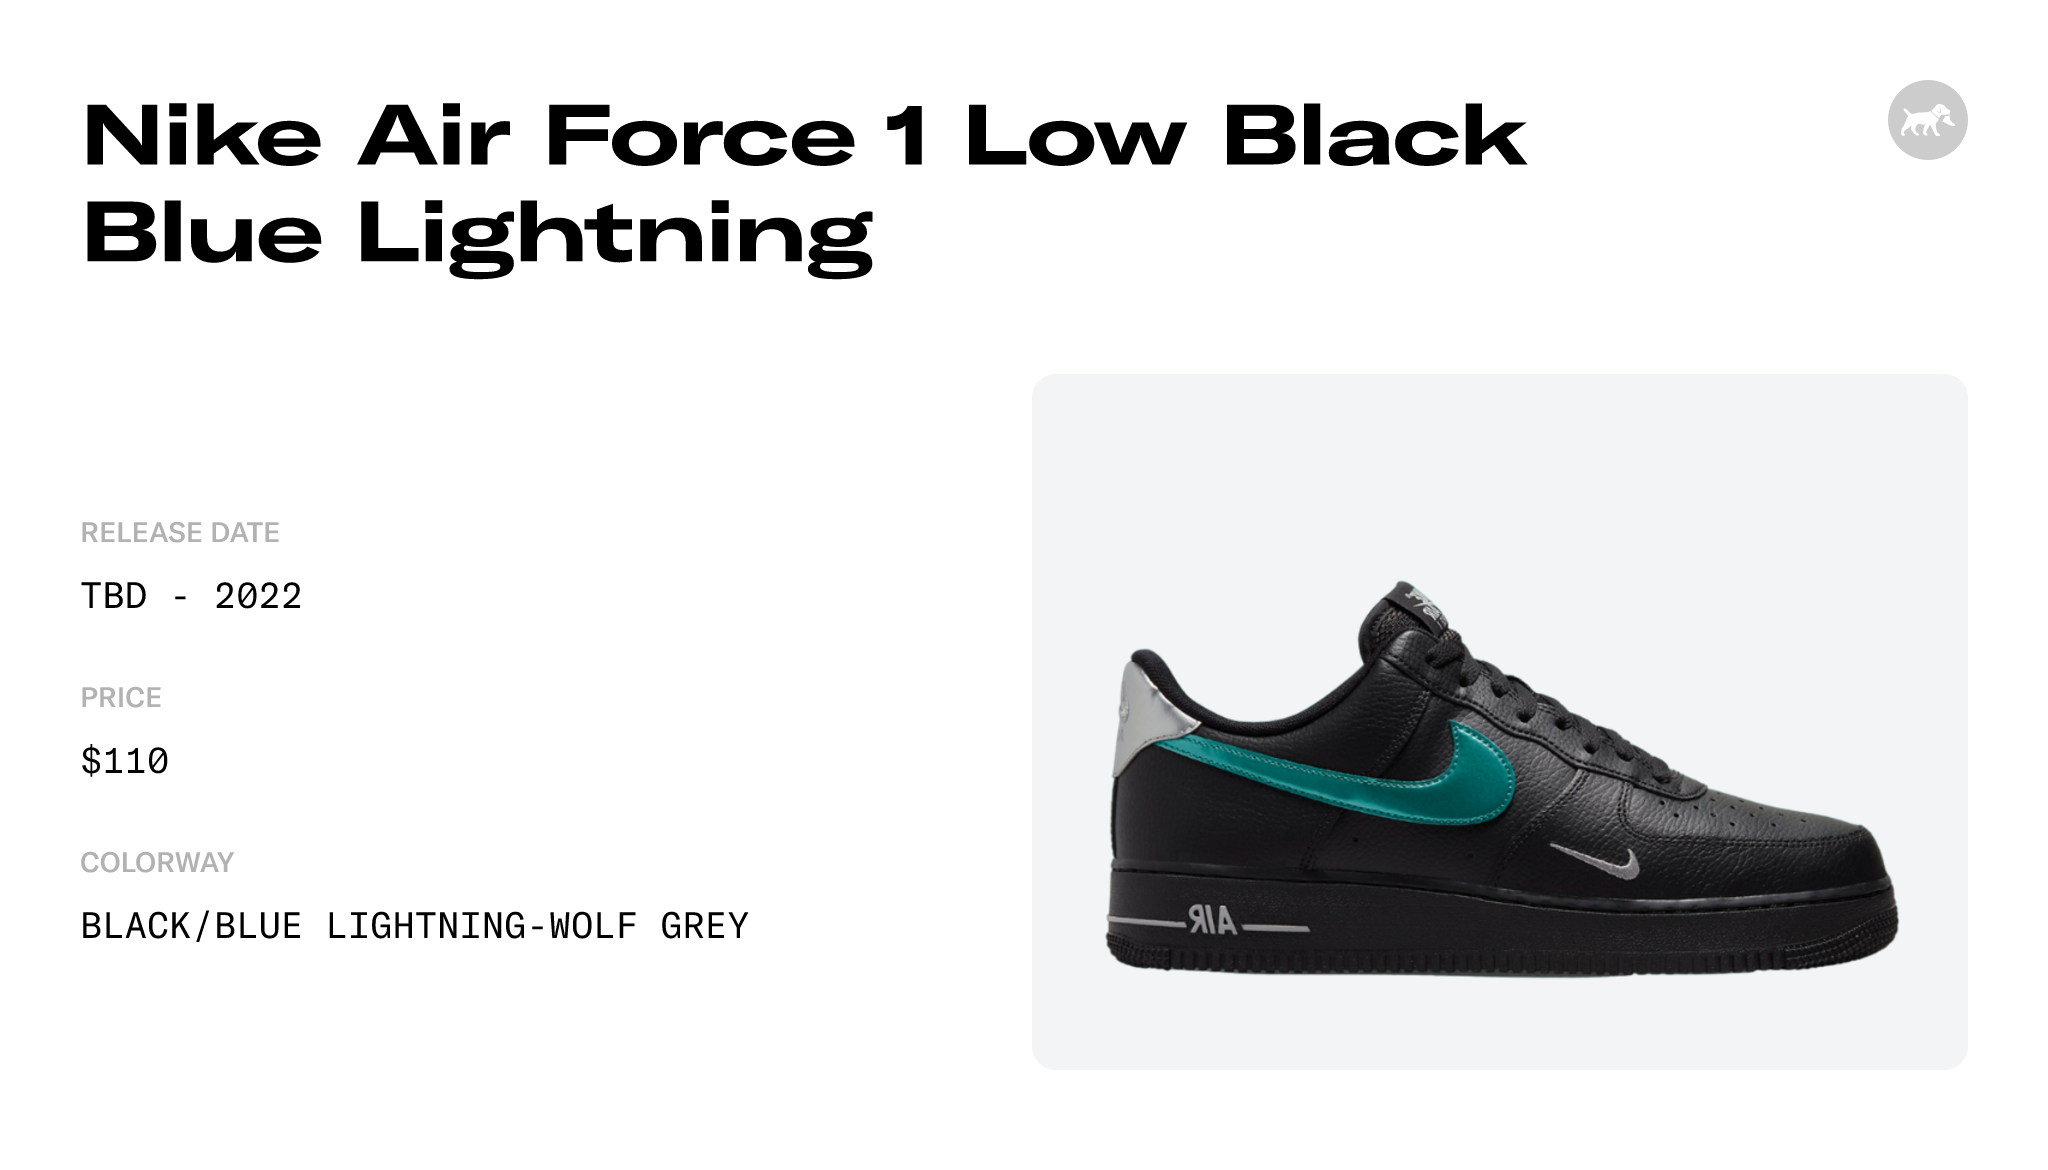 Nike Air Force 1 Black Men's Shoe - FD0654-001